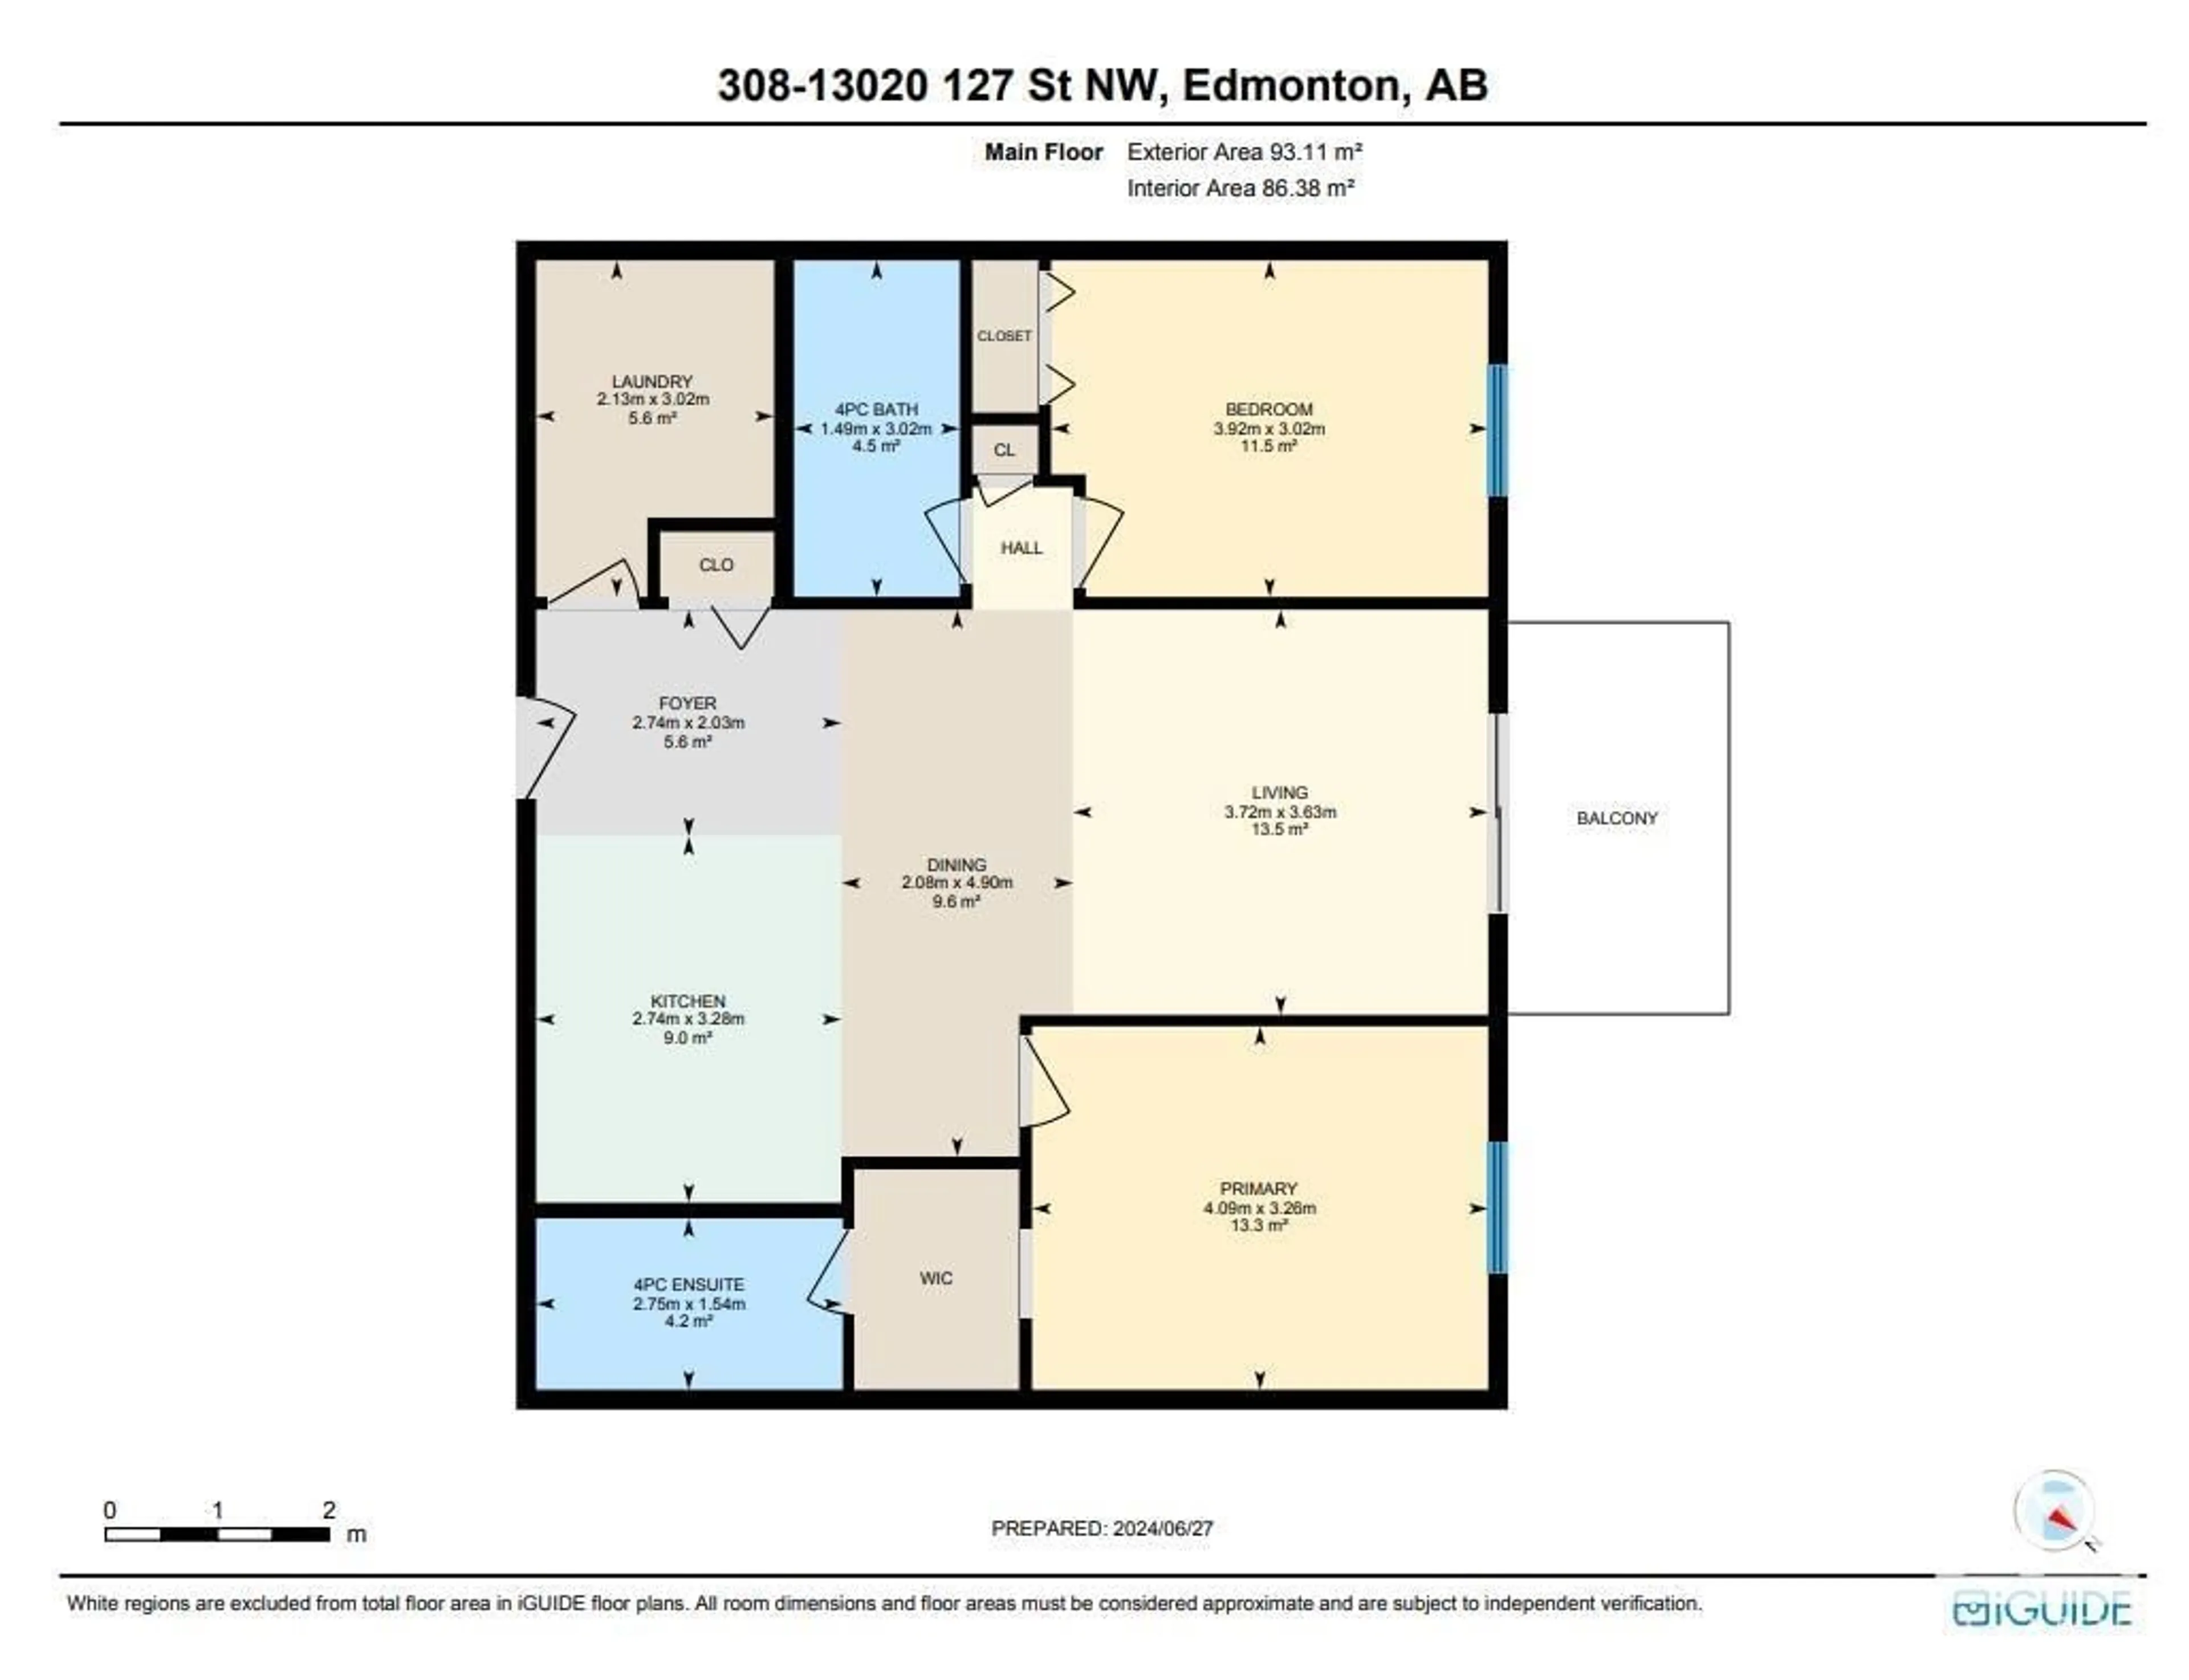 Floor plan for #308 13020 127 ST NW, Edmonton Alberta T5L1A9